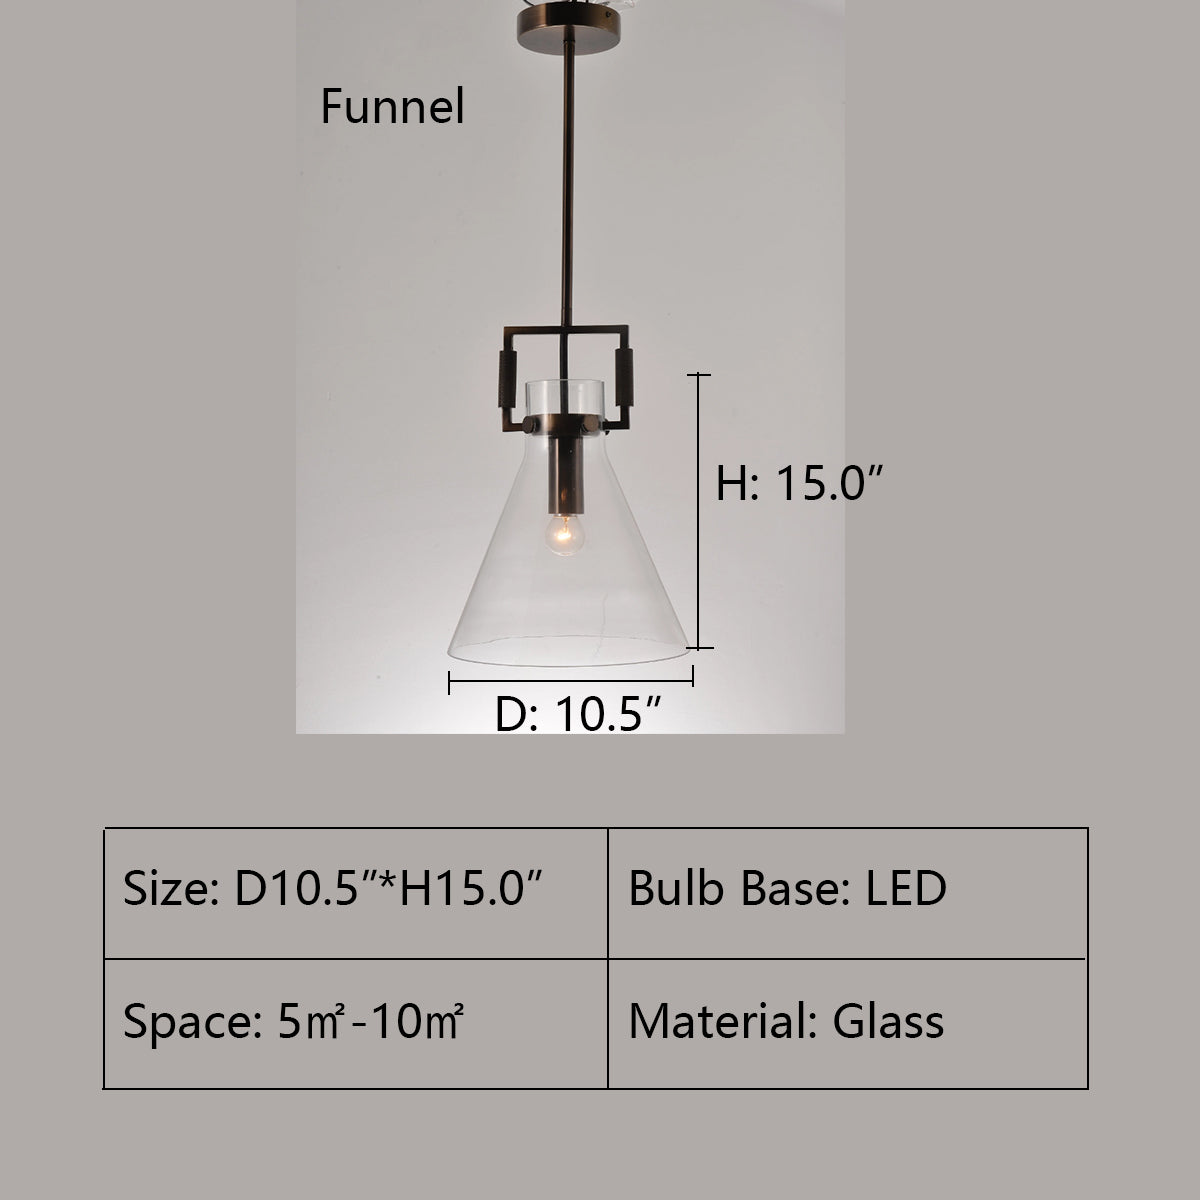 Funnel: D10.5"*H15.0" MODULE GLASS PENDANT LIGHT,pendant,glass,black iron,metal,ceiling,kitchen island,bar,dining table,long table,dining bar,kitchen bar,island,modern light,glass light